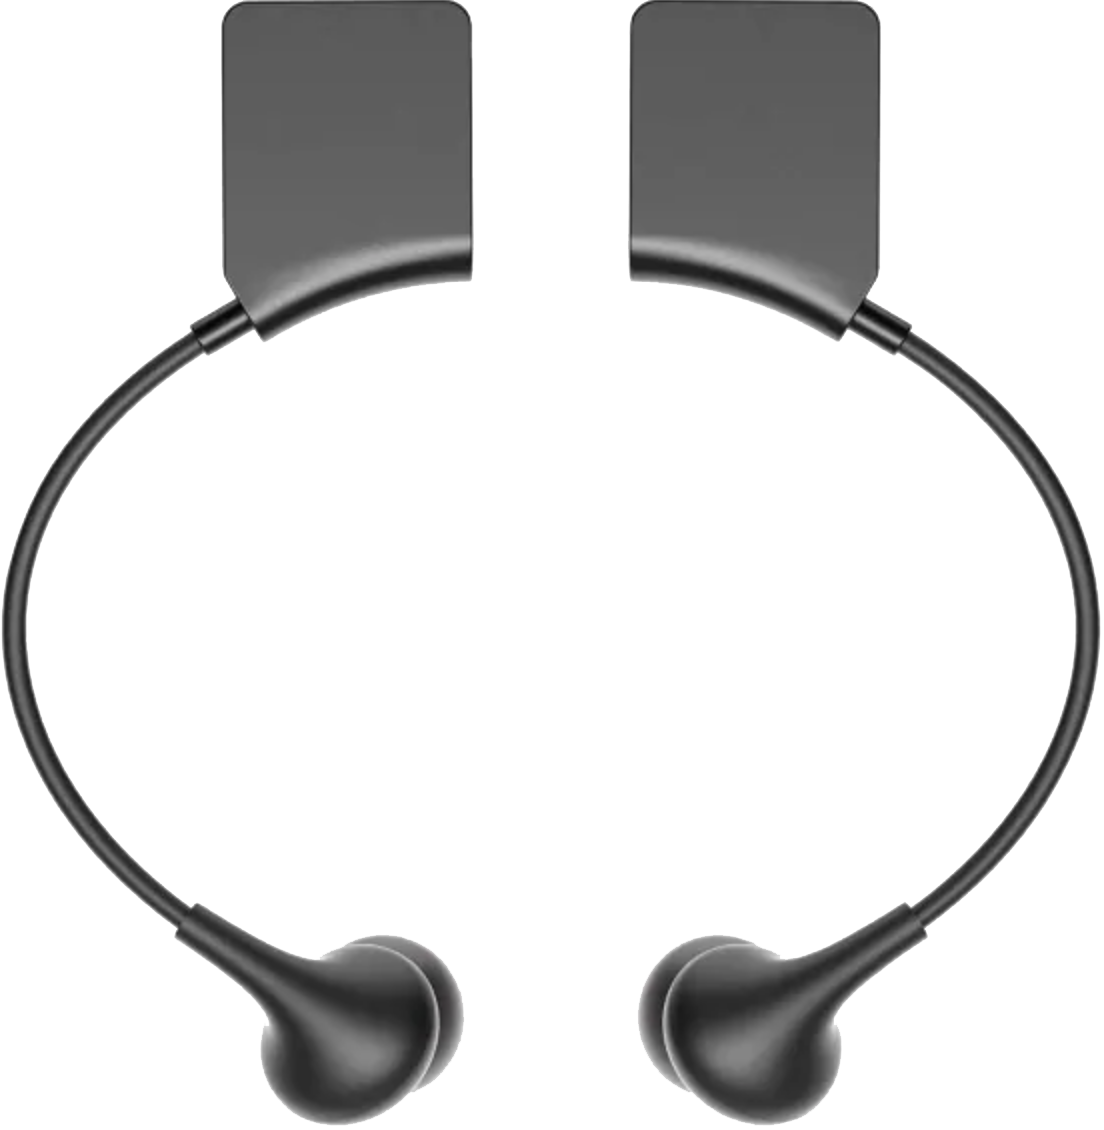 Oculus Rift earphones